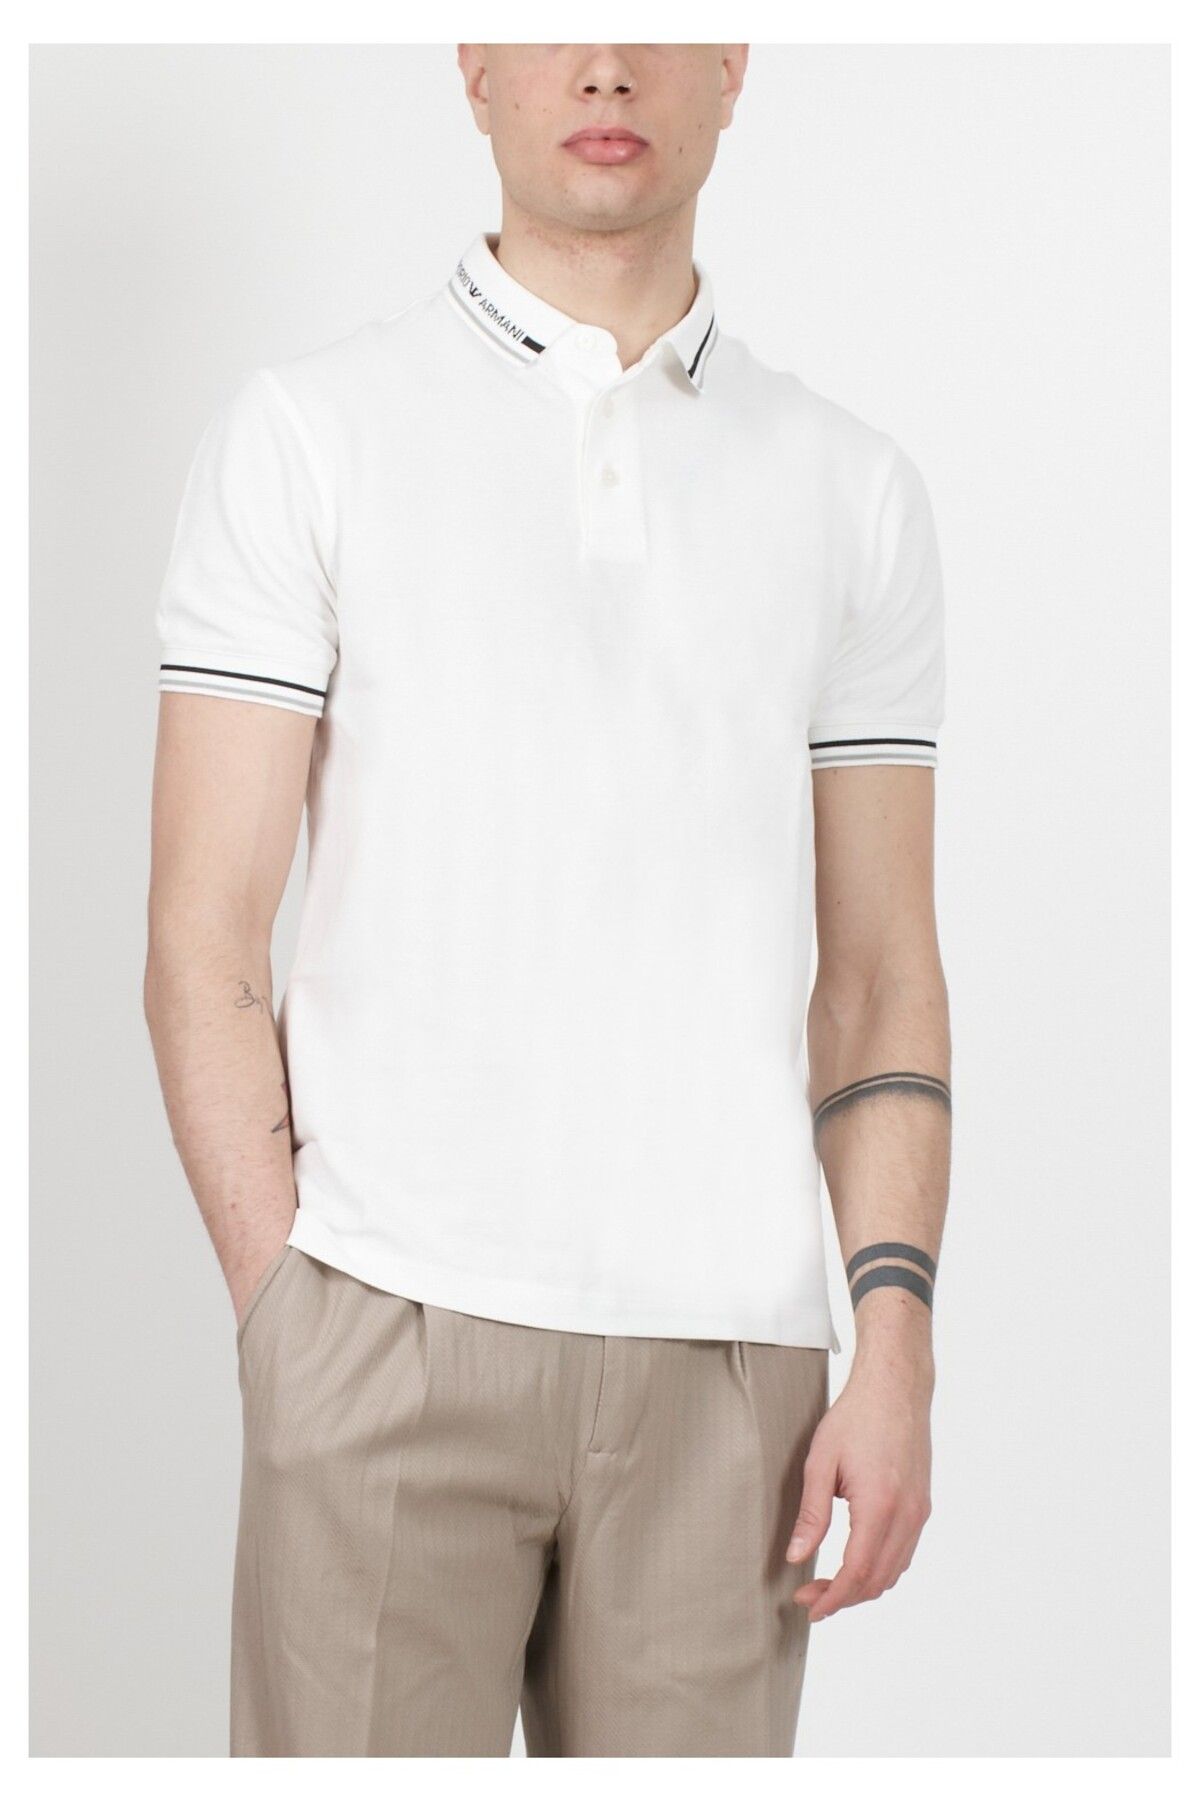 Emporio Armani Erkek Logolu Polo Yakalı Kısa Kollu Düğmeli Beyaz Polo Yaka T-Shirt 3D1FM4 1JCYZ-01N1